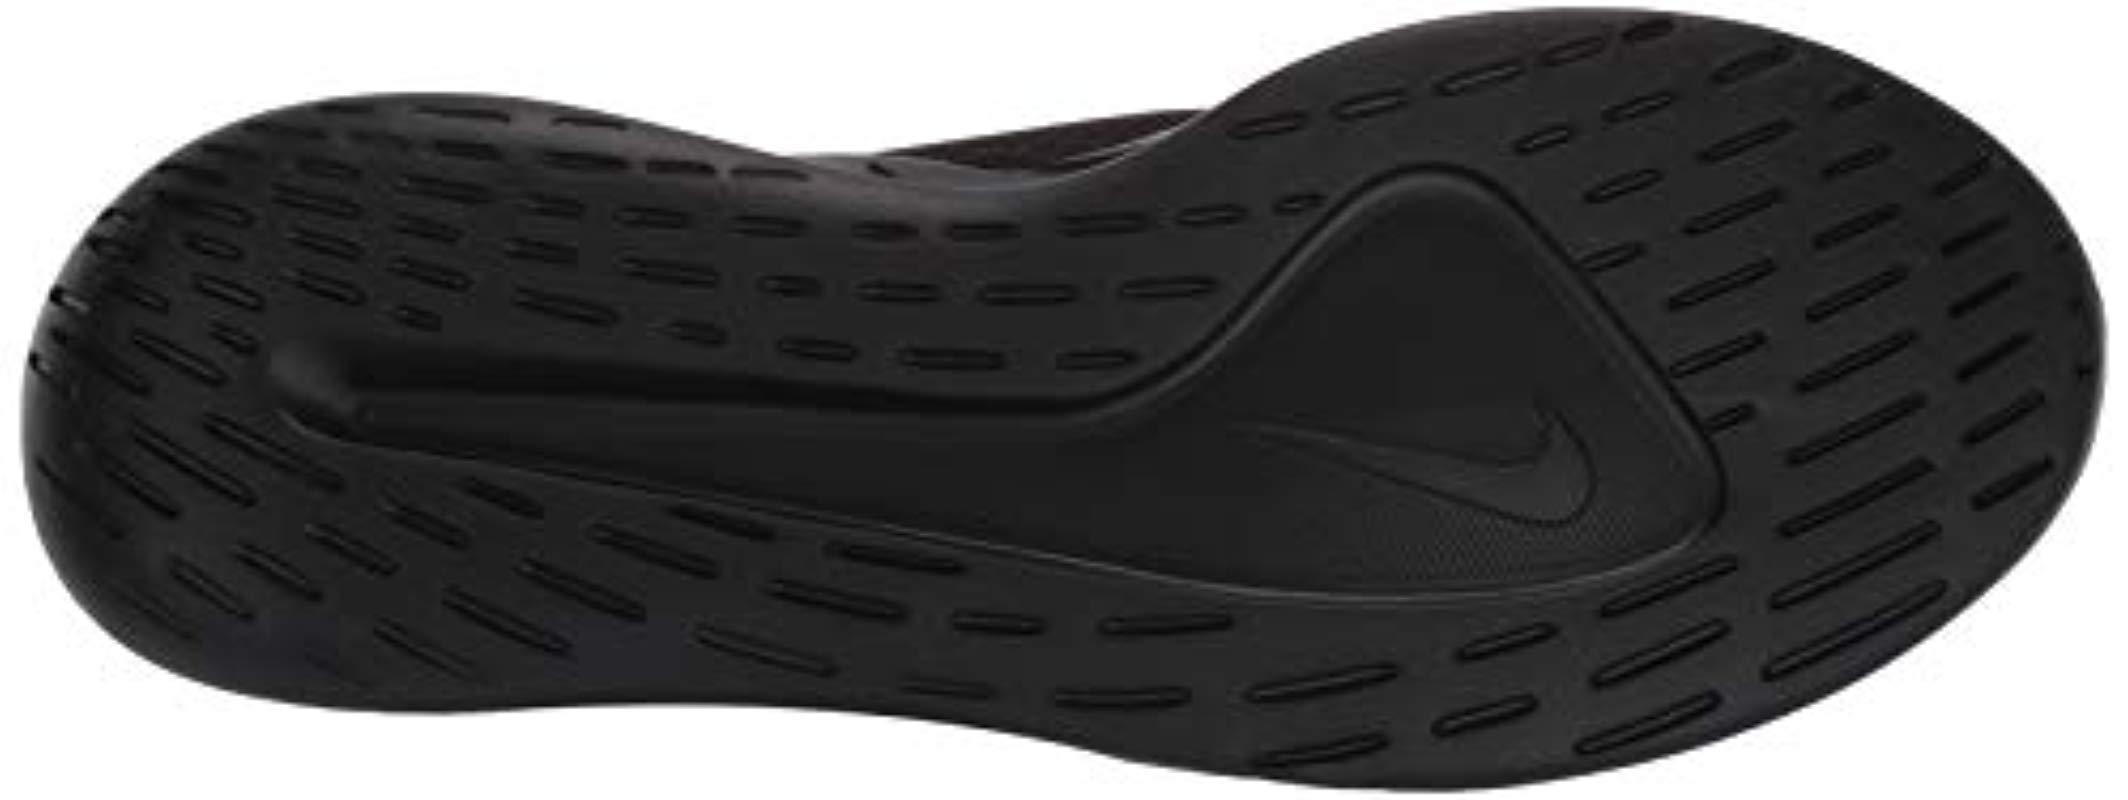 Nike Synthetic Viale Slp Sneaker in Black/Black - Black (Black) | Lyst